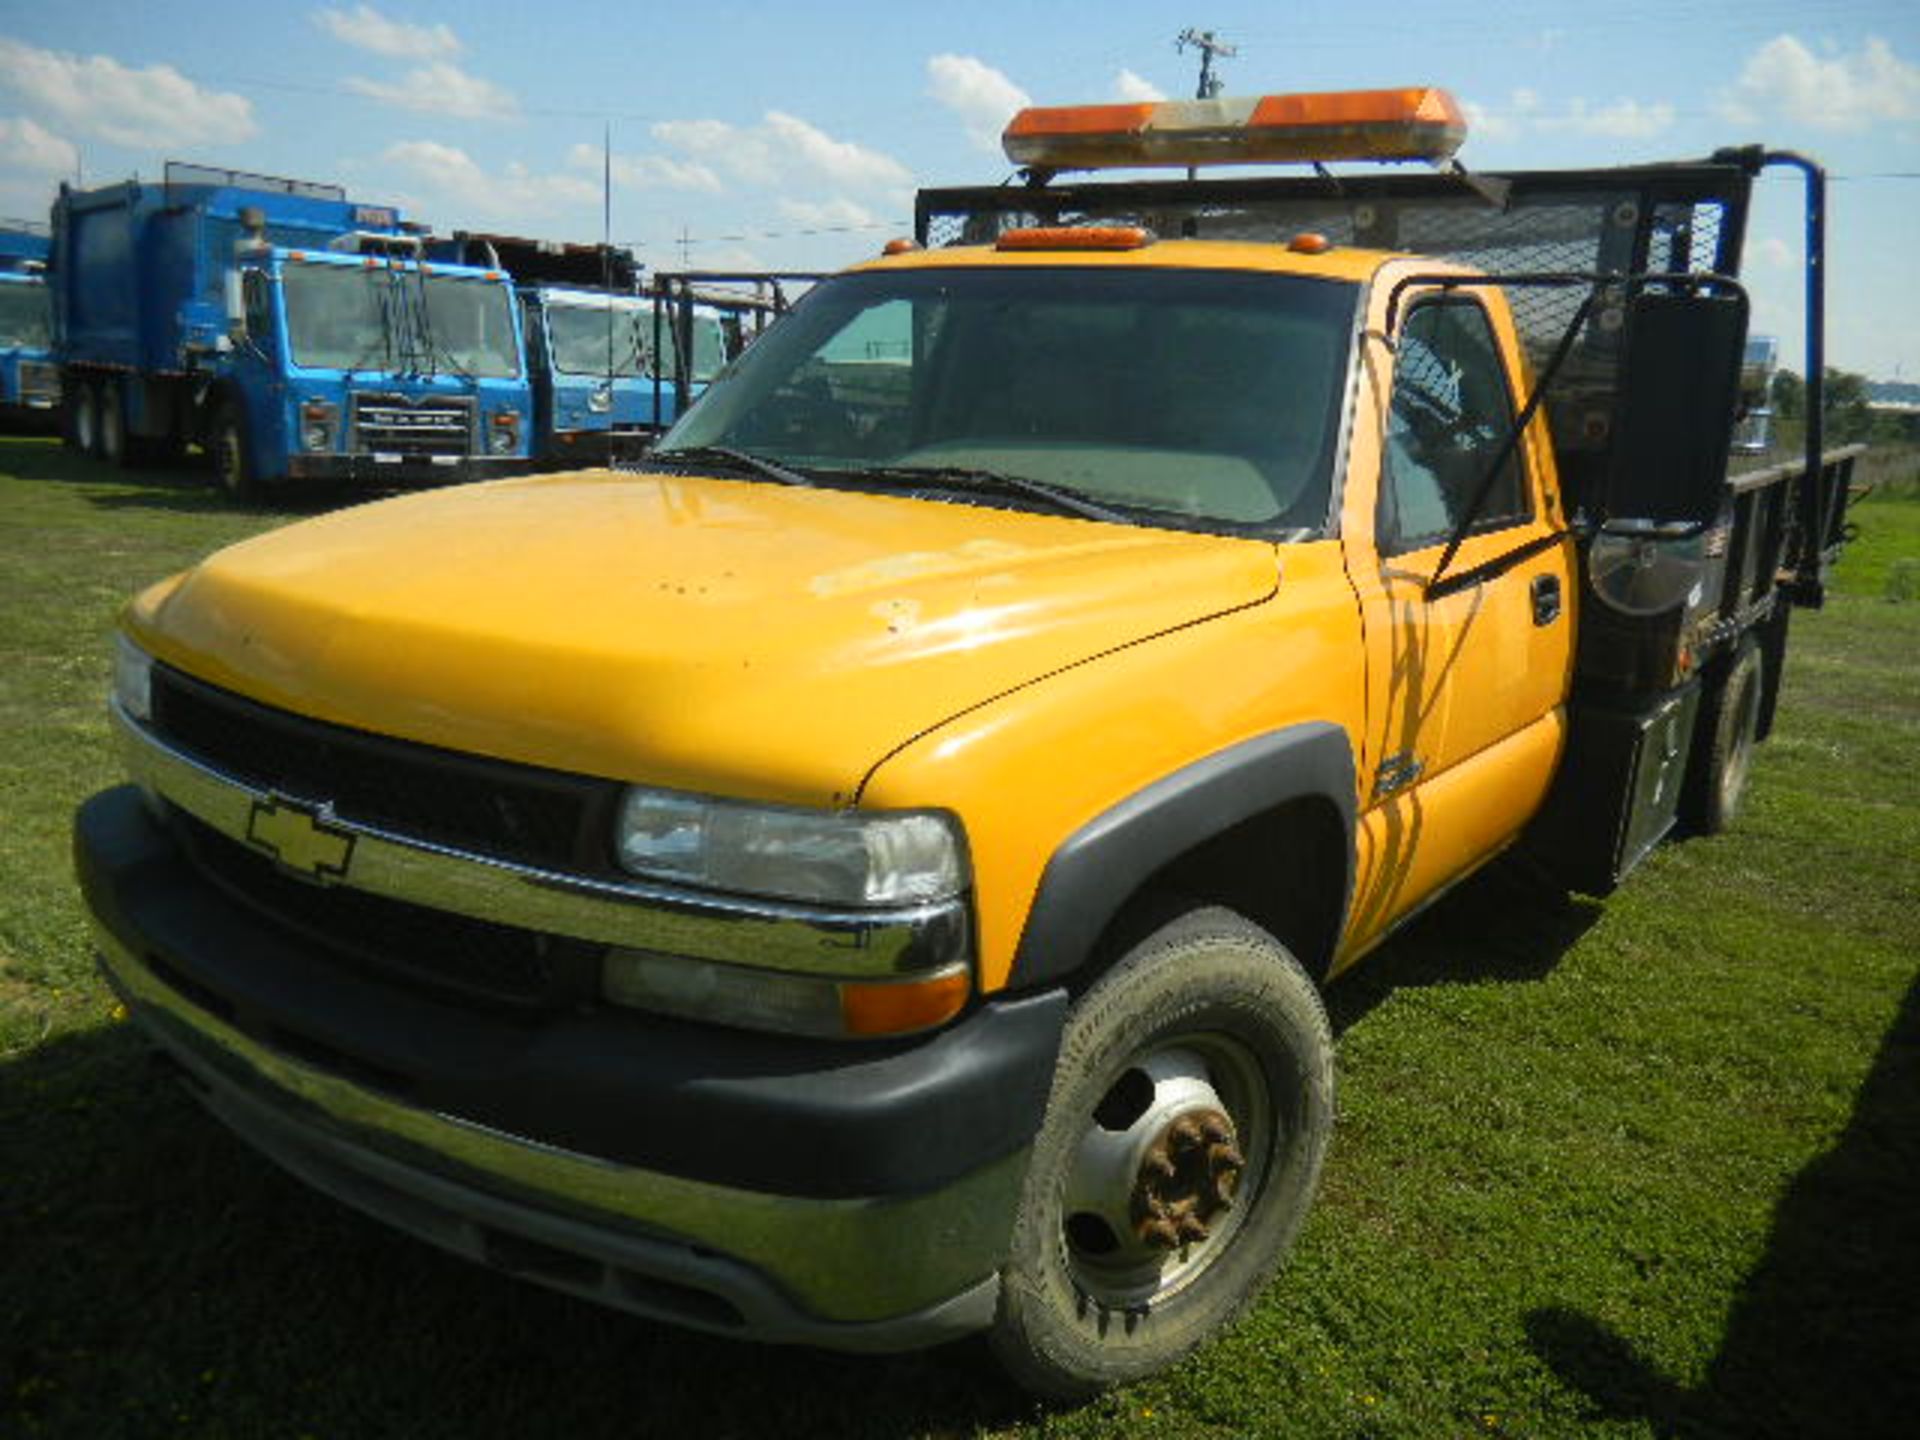 2001 Chevrolet 3500 DuraMax Diesel Flatbed Truck (Yellow) - Asset I.D. #152 - Last of Vin (202702)